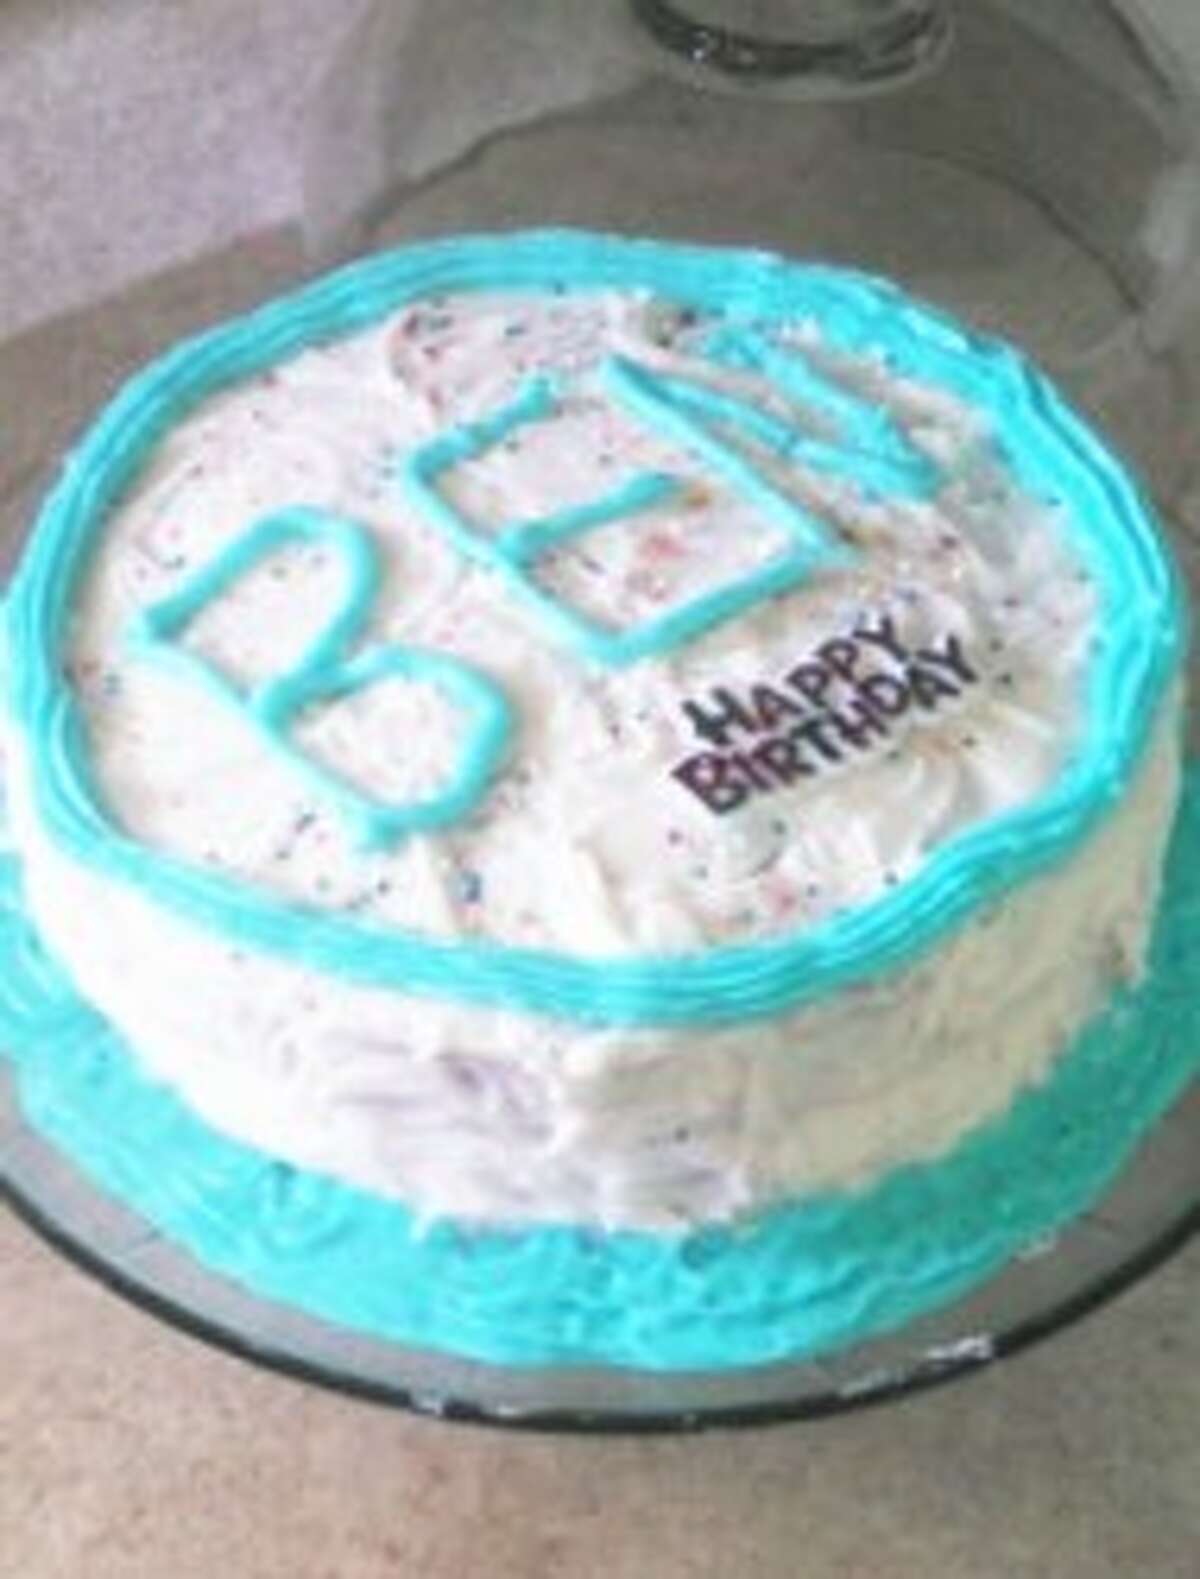 Benjamin's chocolate cake